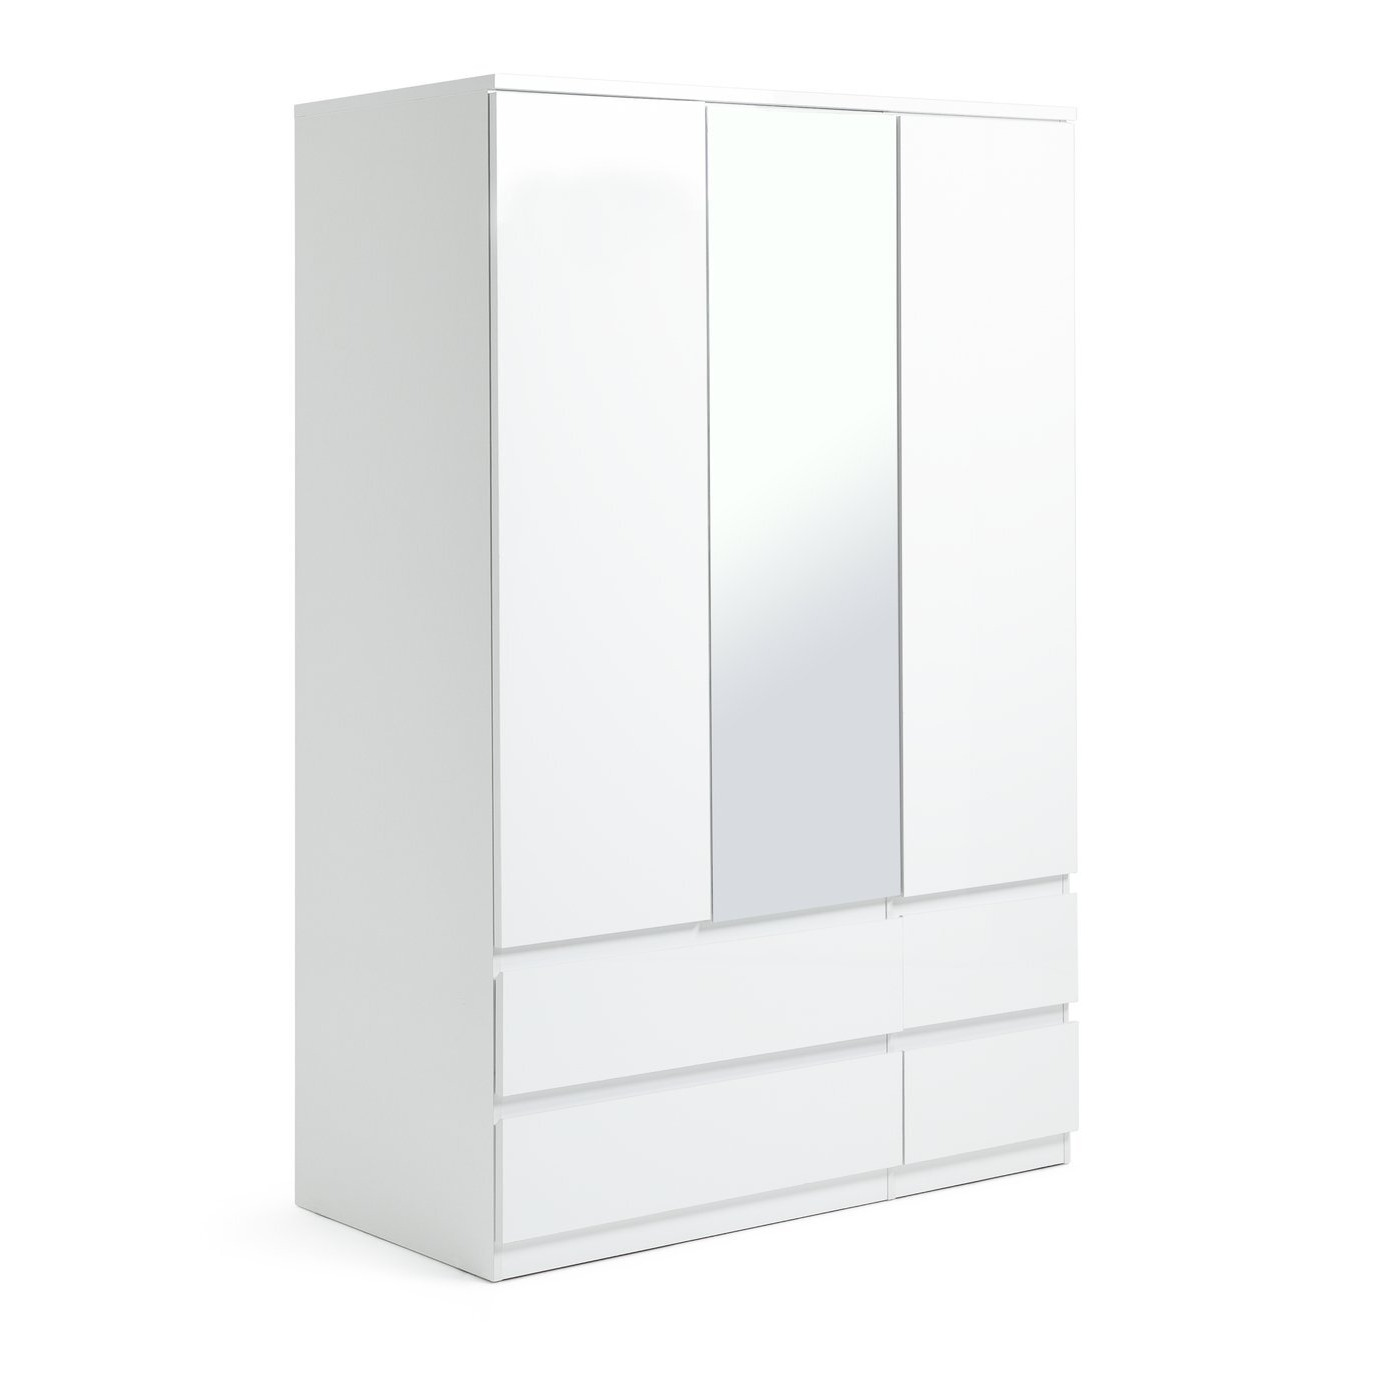 Habitat Jenson 3 Door 4 Drawer Mirror Wardrobe - White Gloss - image 1